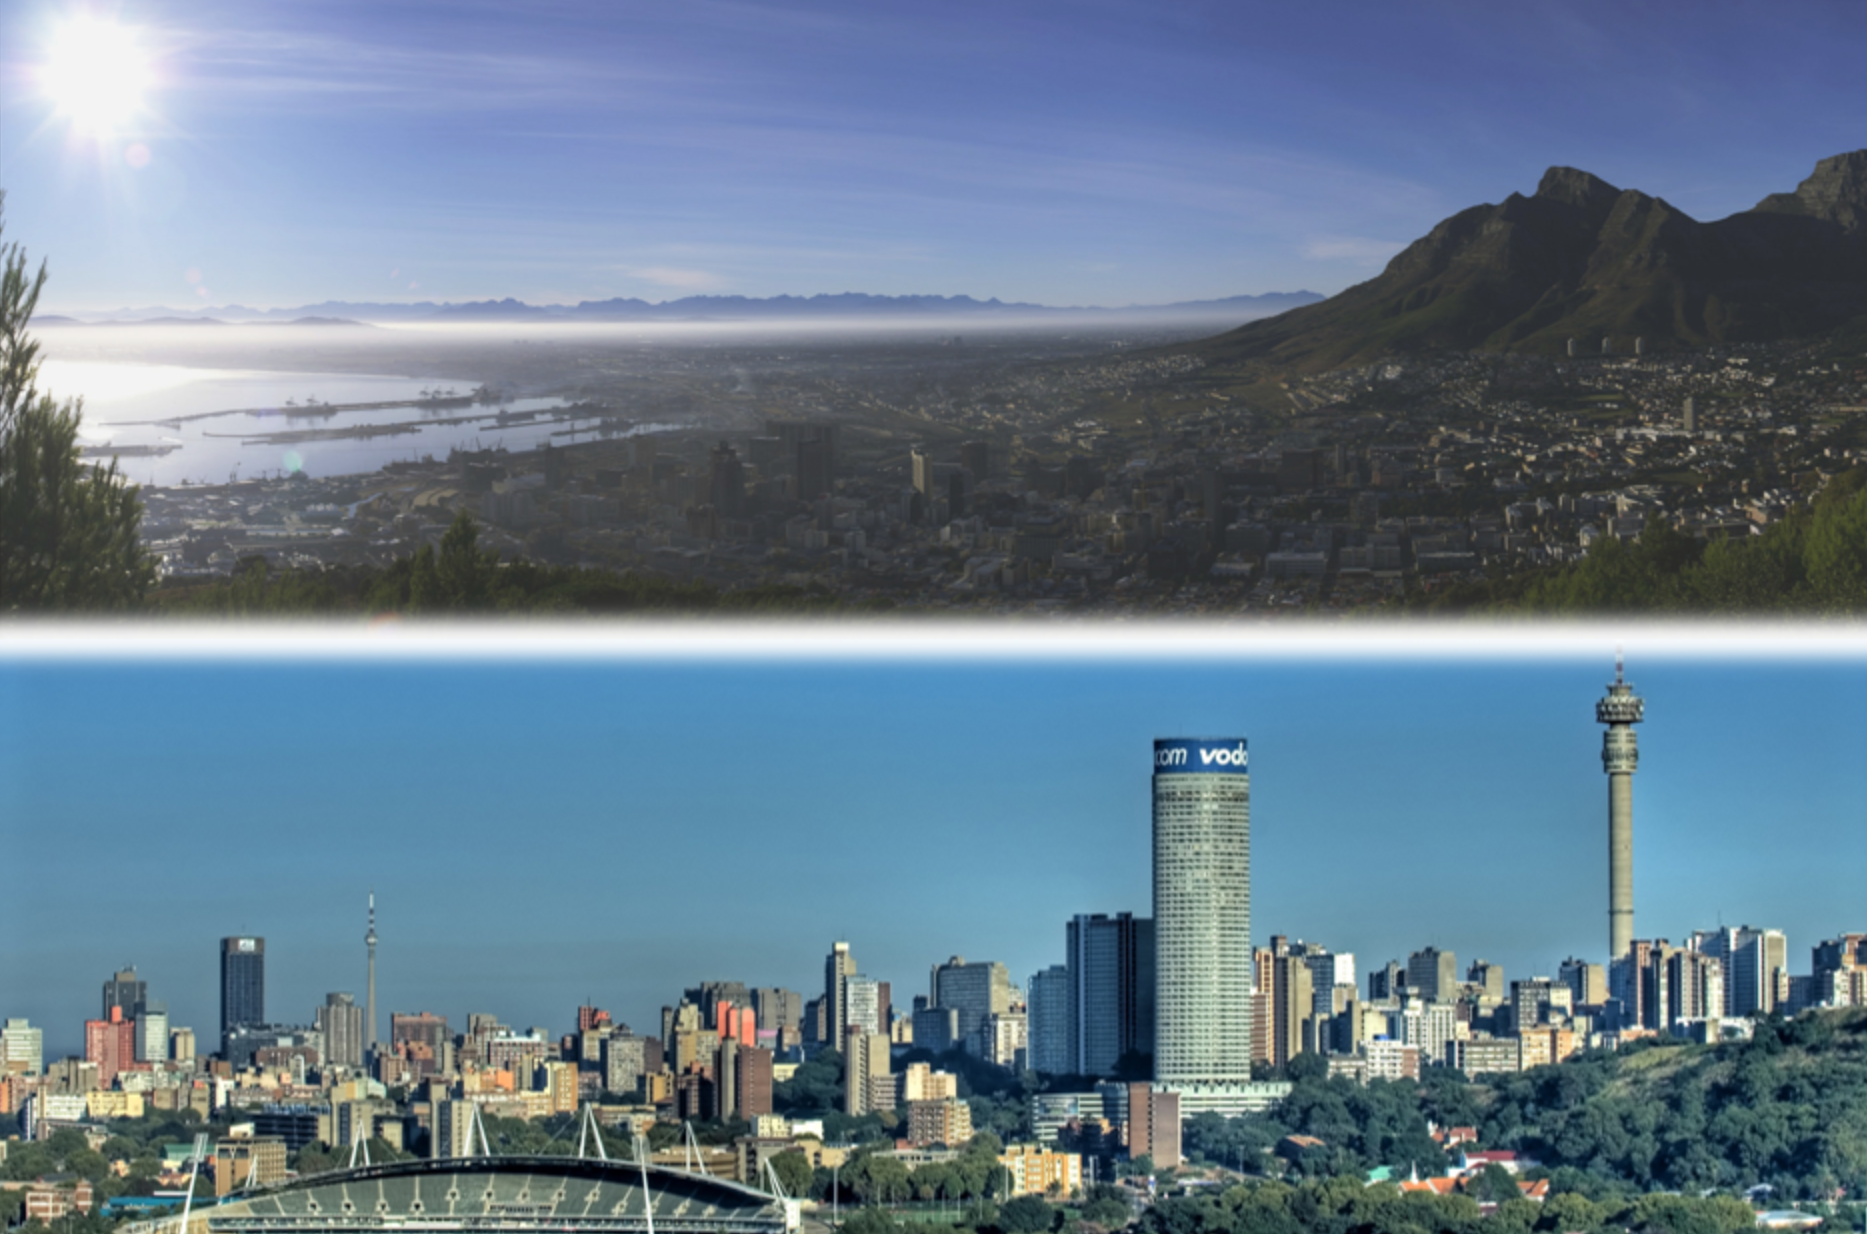 Split photo of shoreline in Capetown and city skyline in Johannesburg